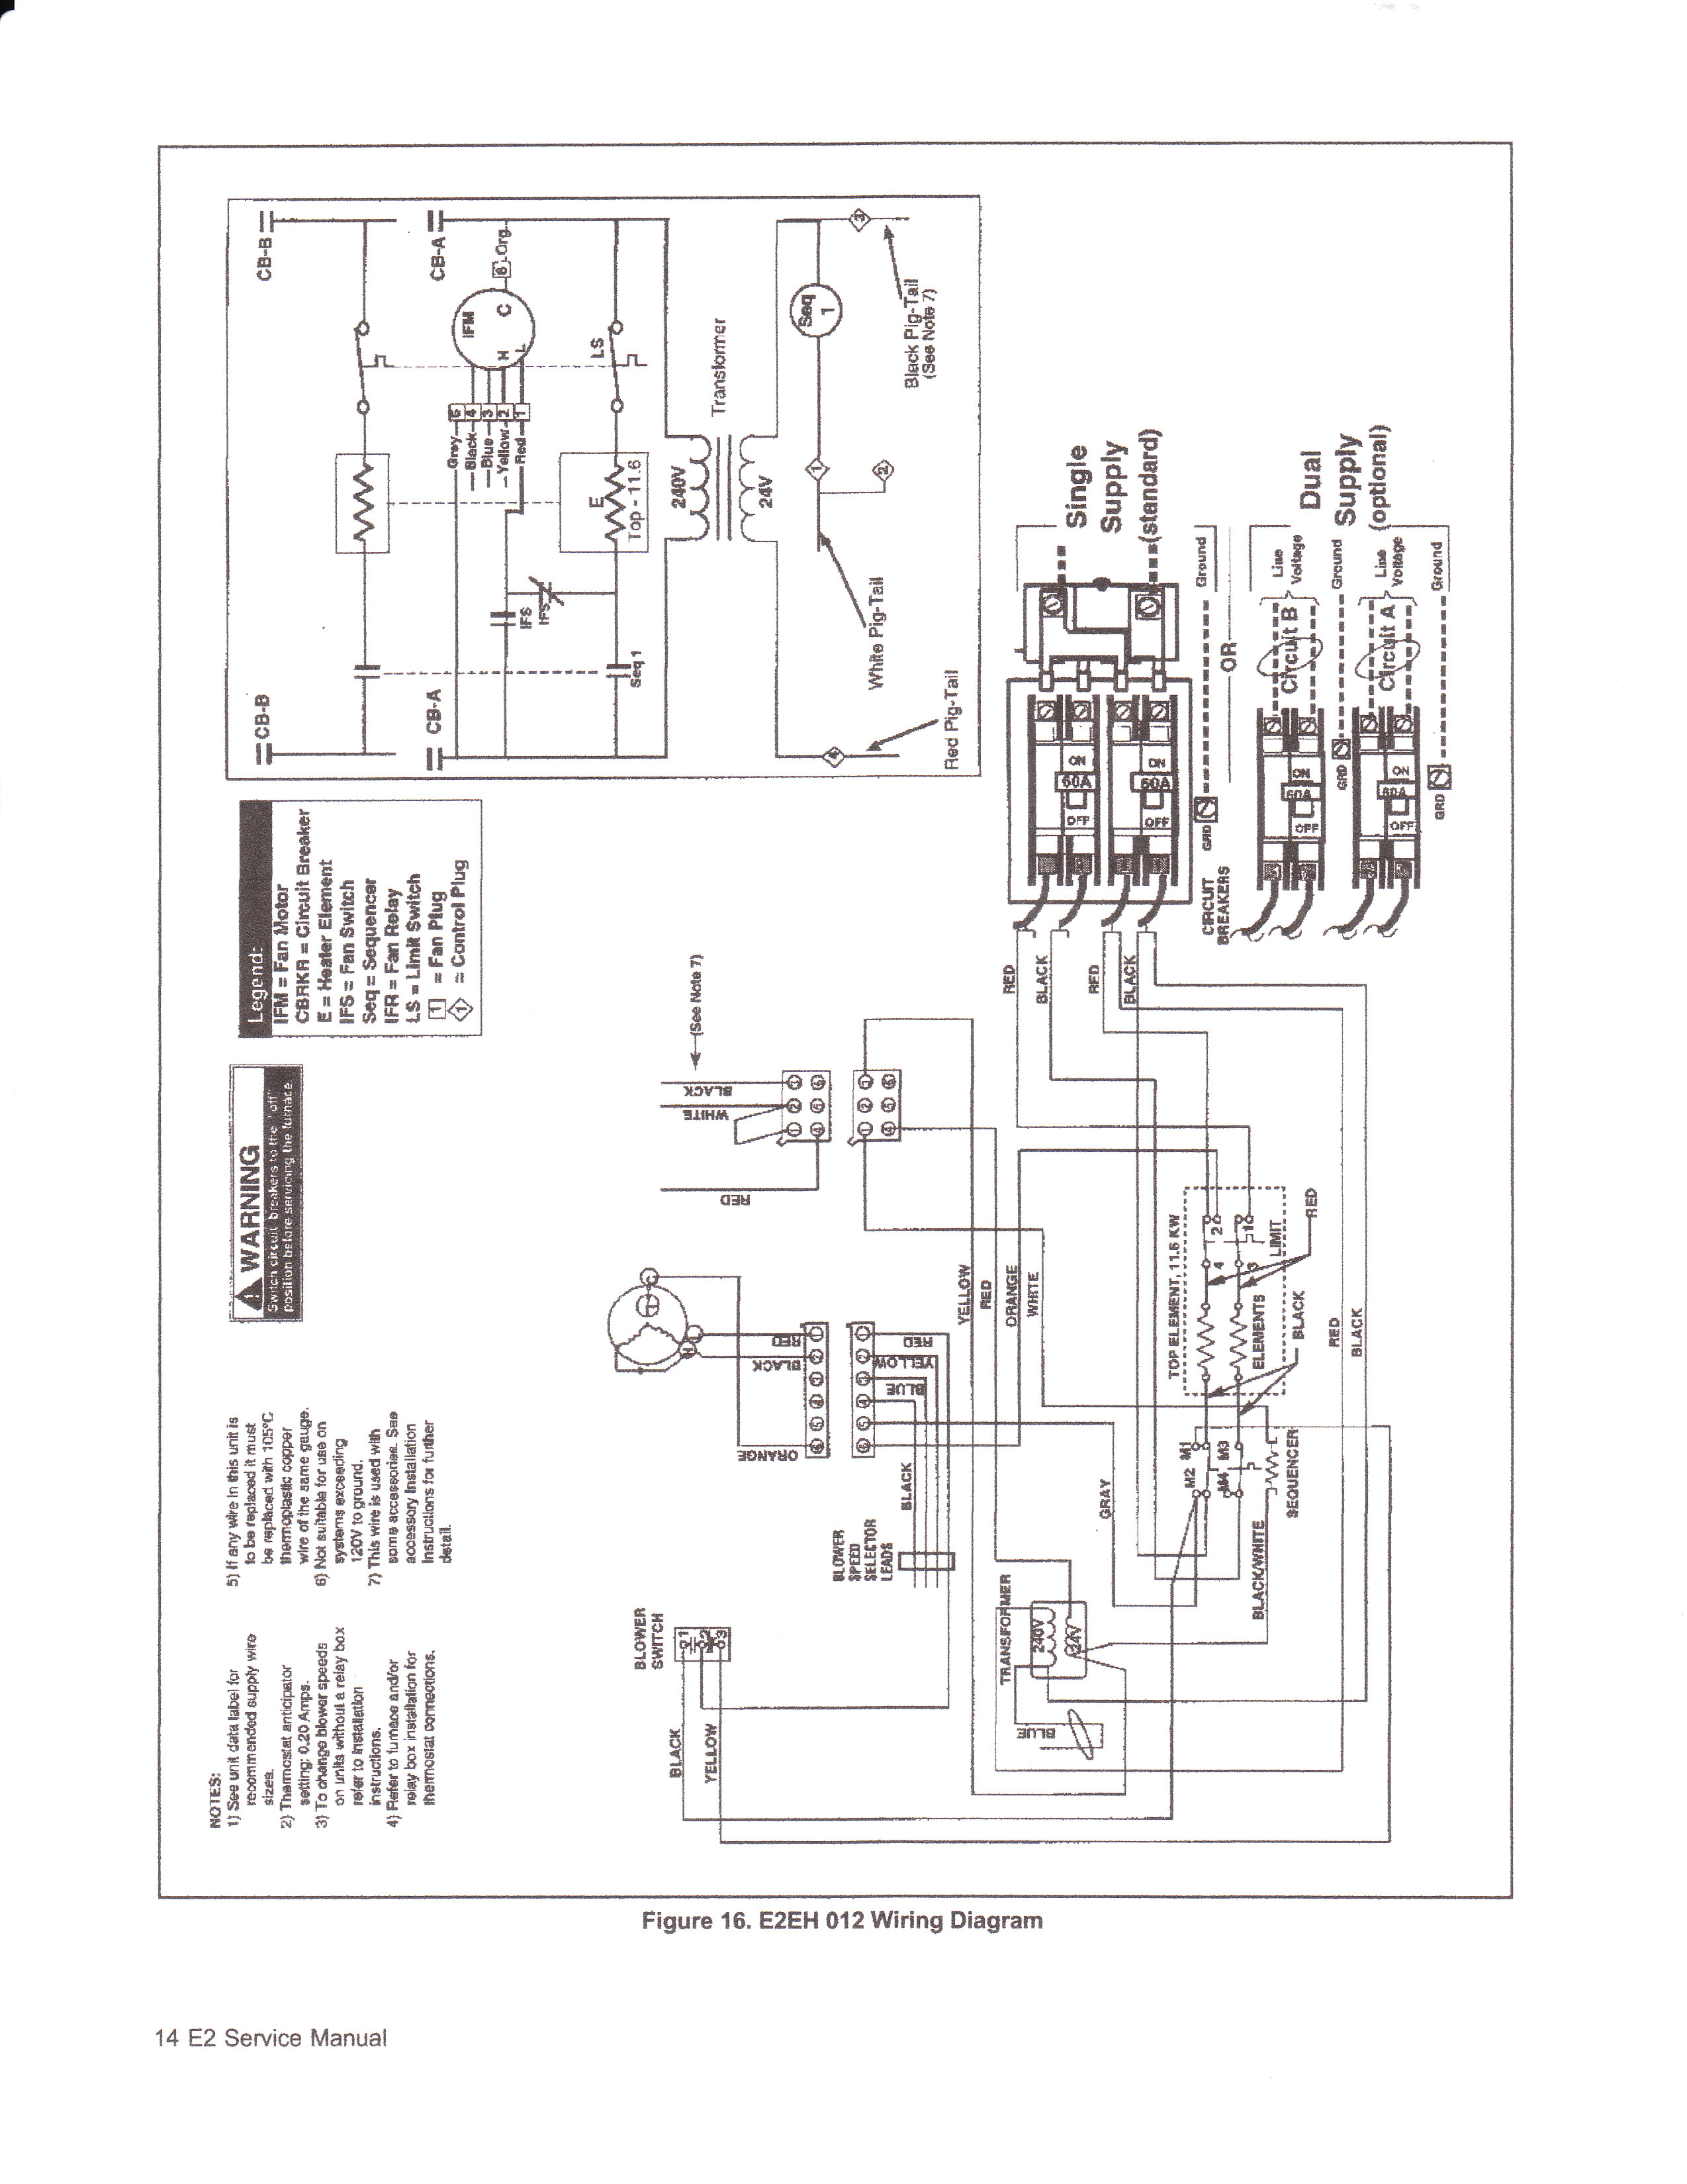 Coleman Furnace Wiring Diagrams